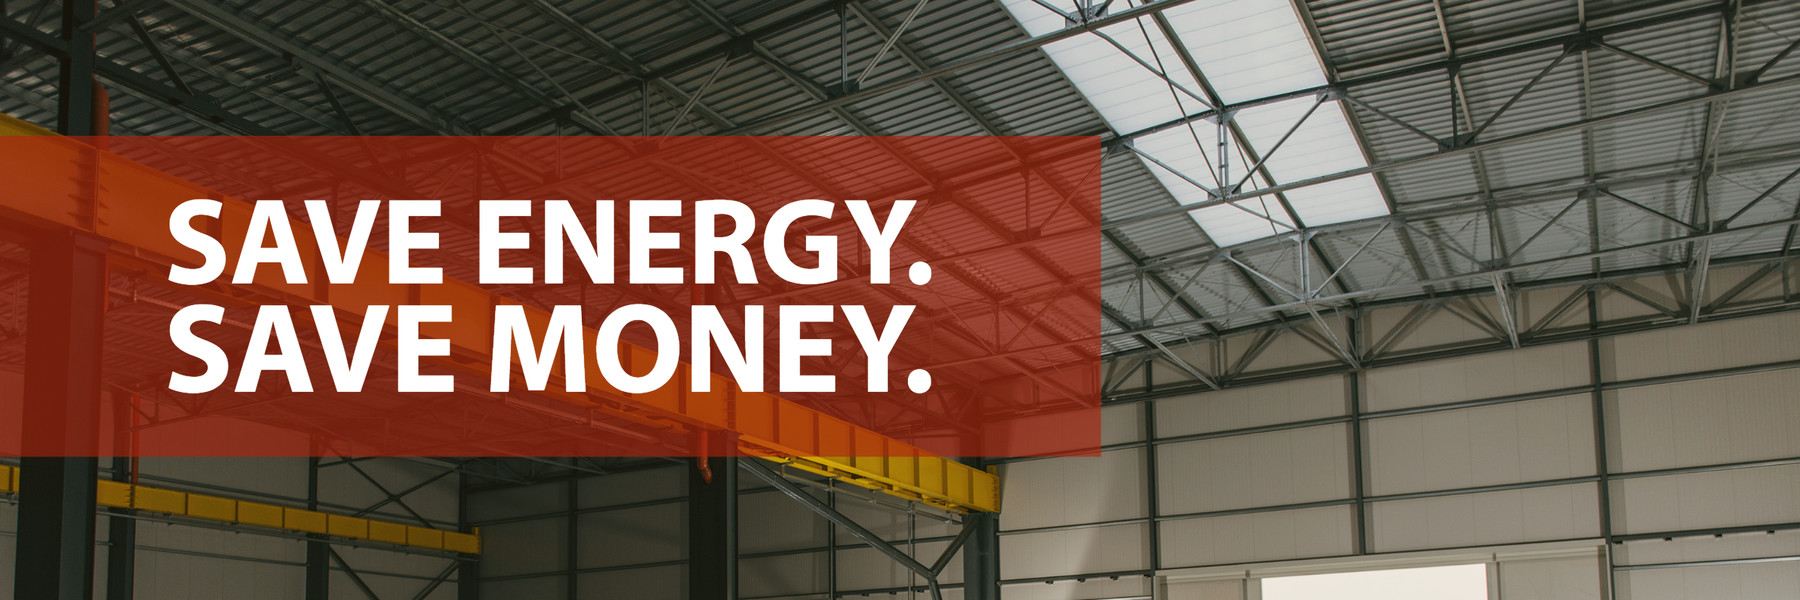 aep-ohio-energy-efficiency-programs-help-businesses-save-energy-and-money